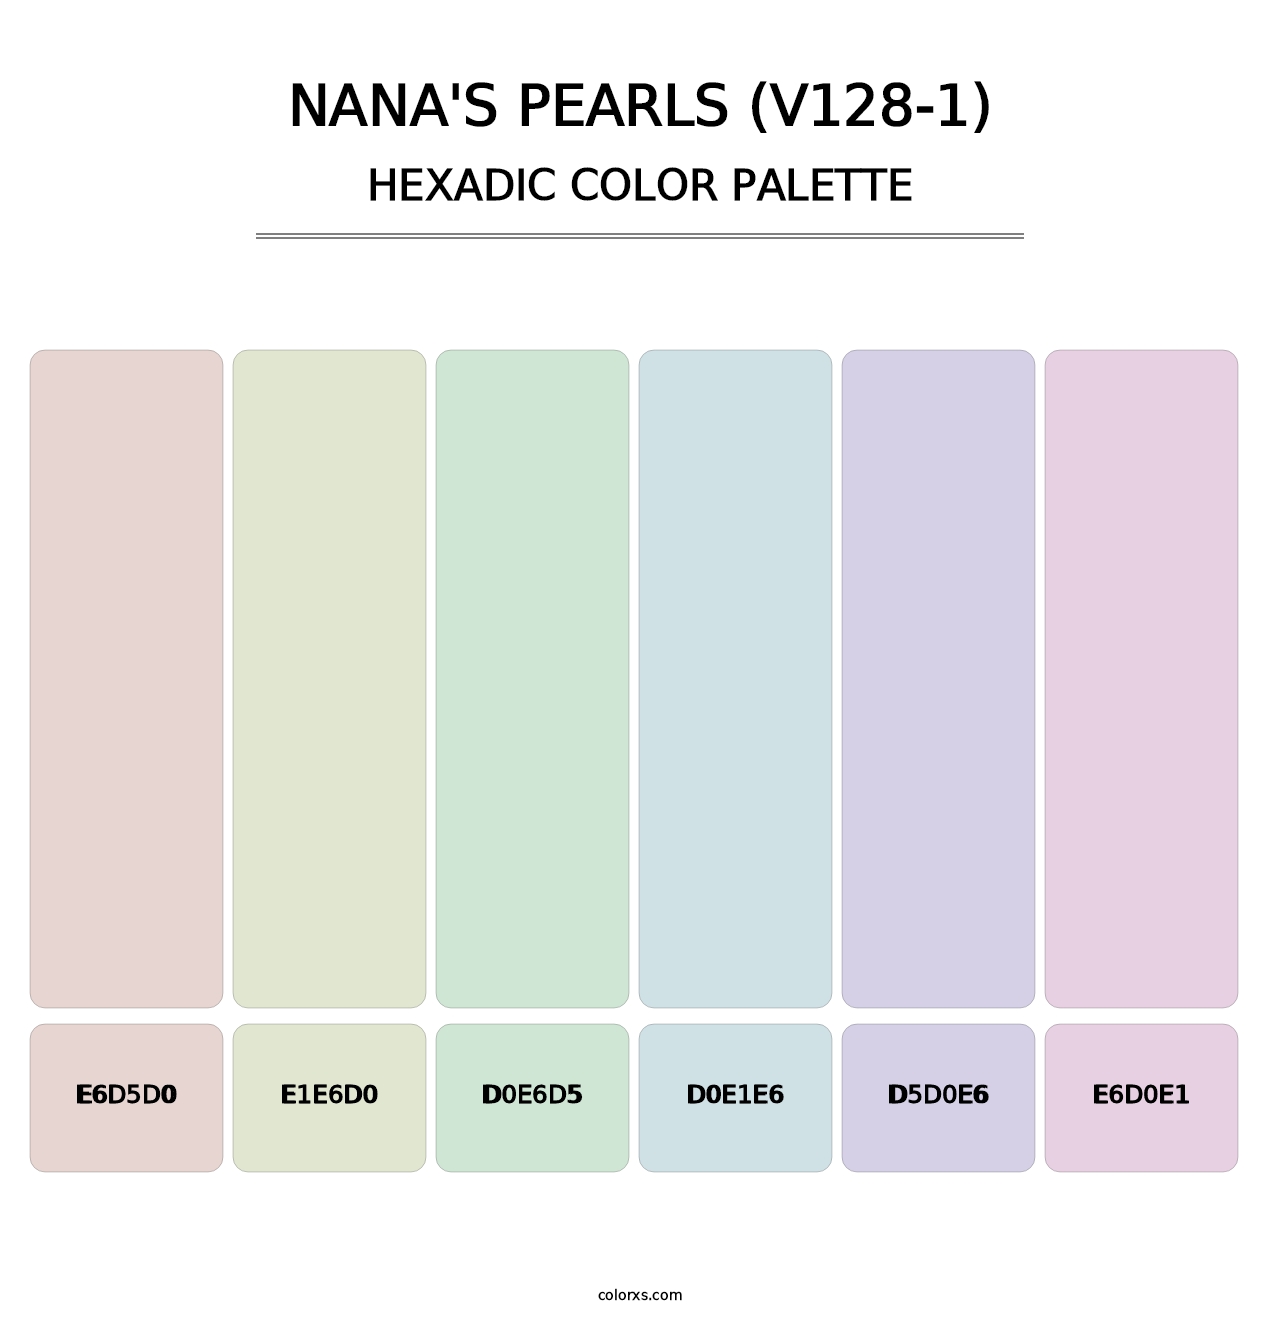 Nana's Pearls (V128-1) - Hexadic Color Palette